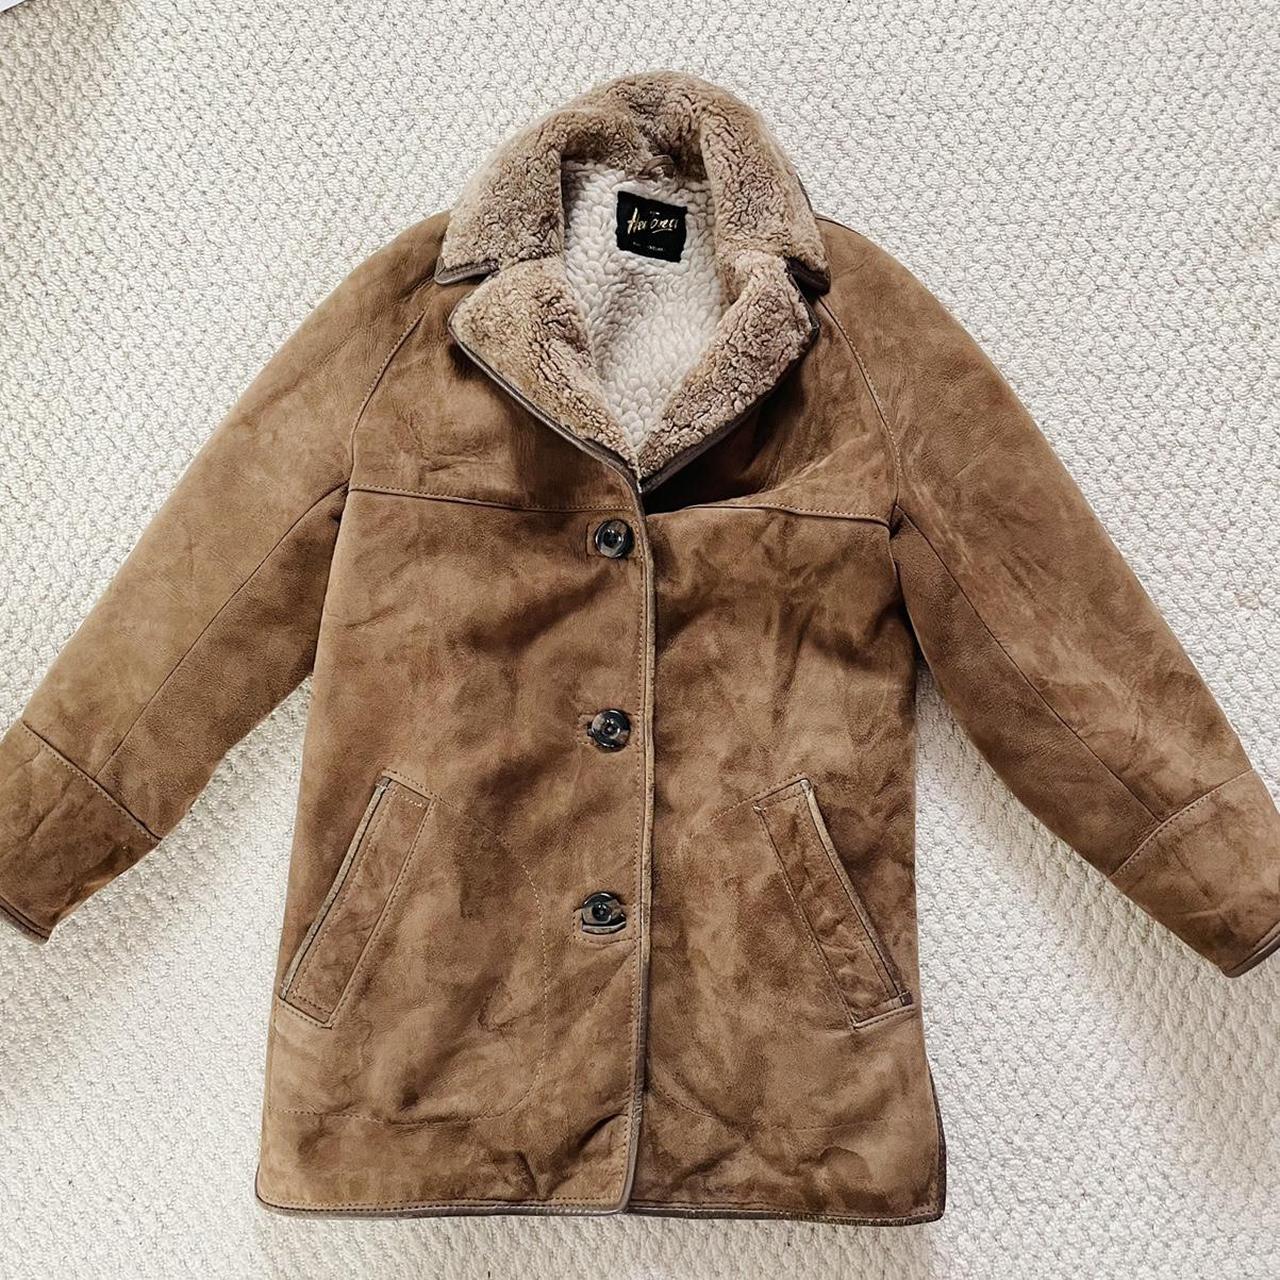 Product Image 1 - Brown sheepskin coat. Vintage. shearling